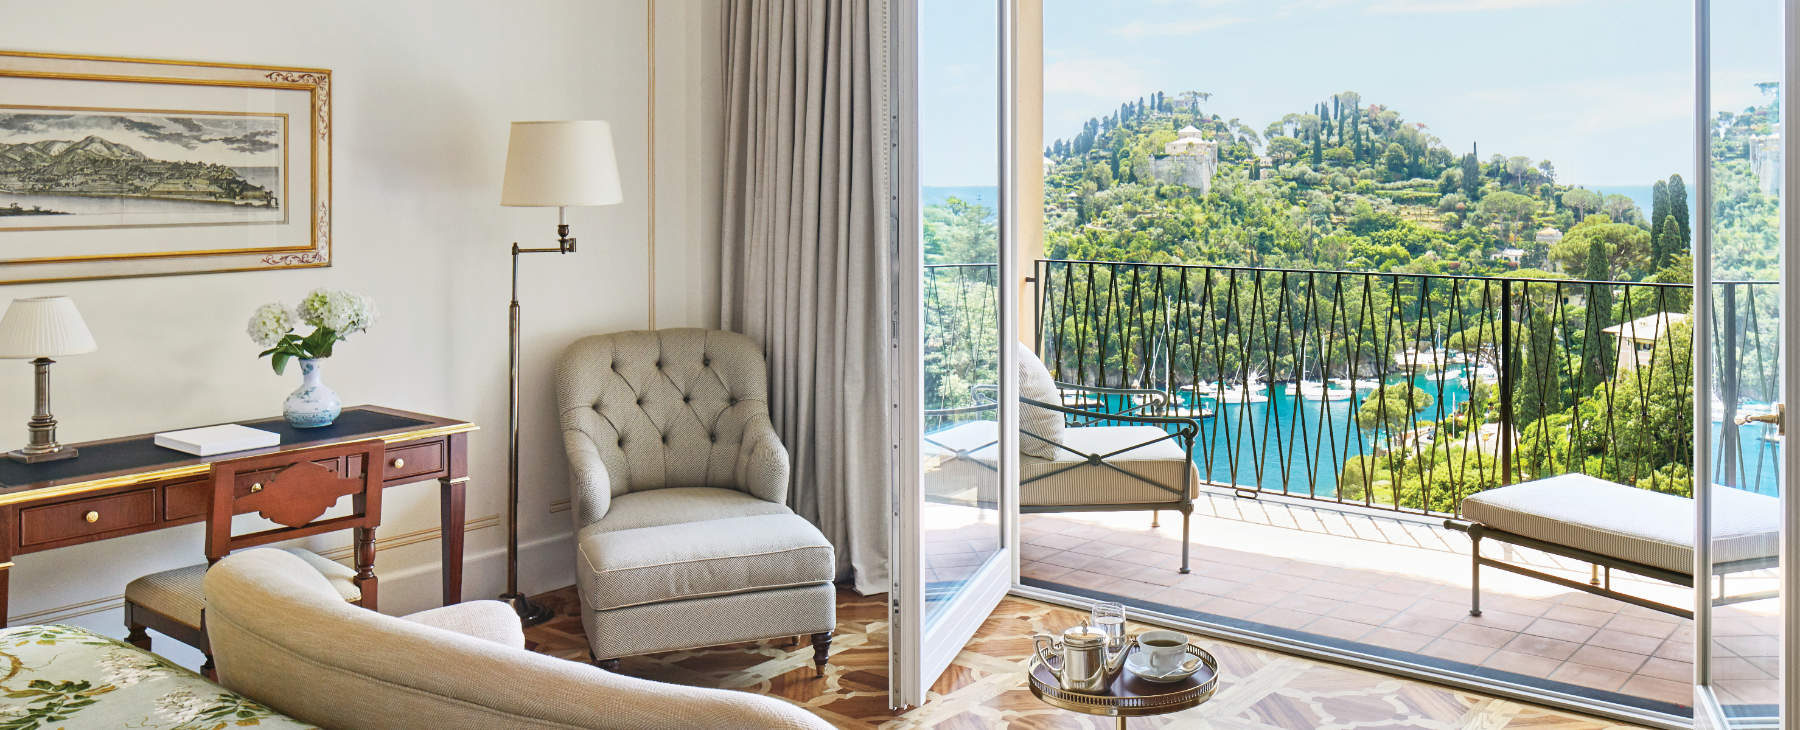 Luxushotel Belmond Hotel Splendido Portofino Italien